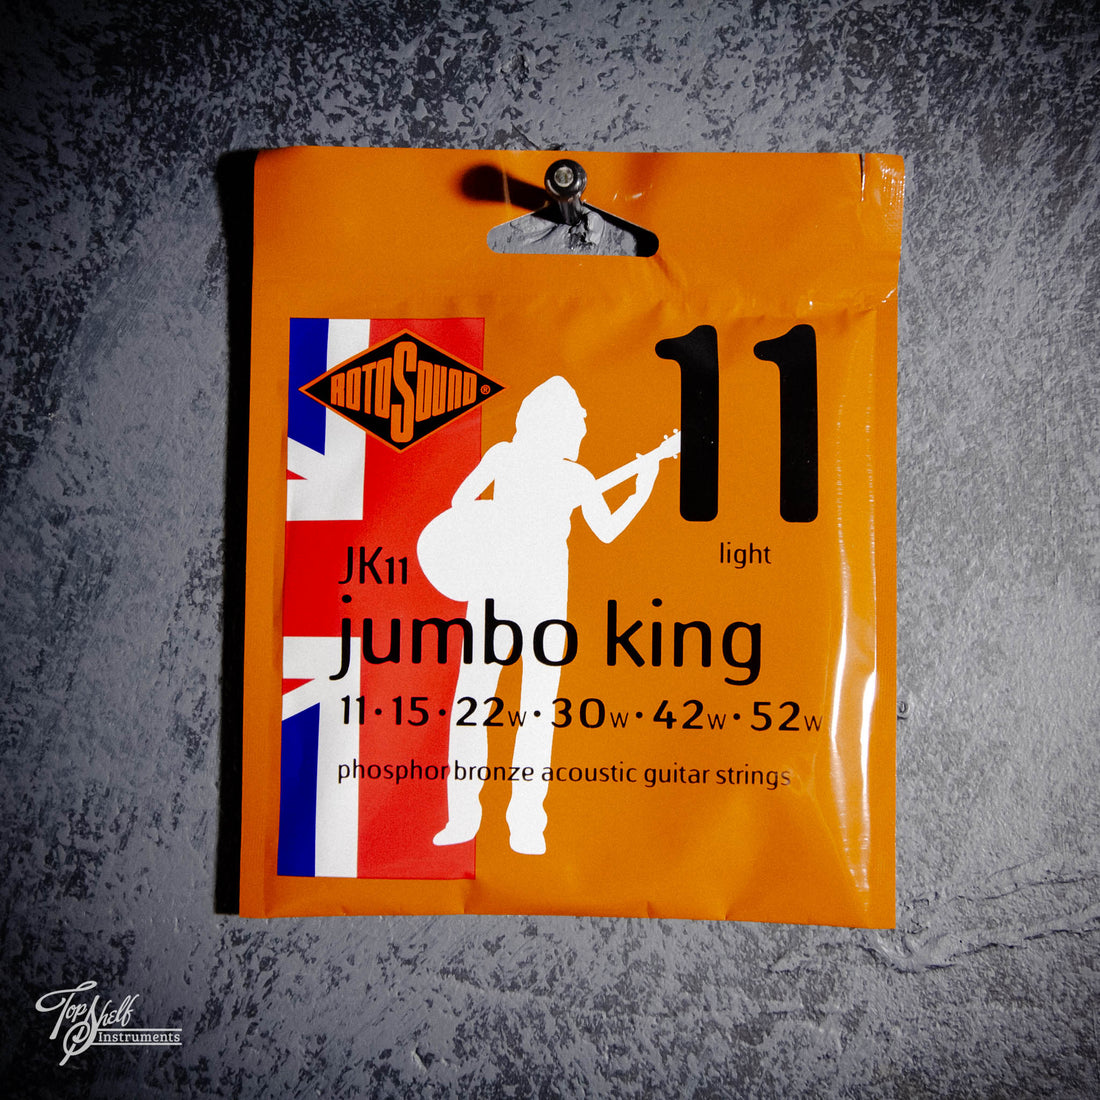 RotoSound JK11 Jumbo King 11-52 Light Phosphor Bronze Acoustic Guitar Strings